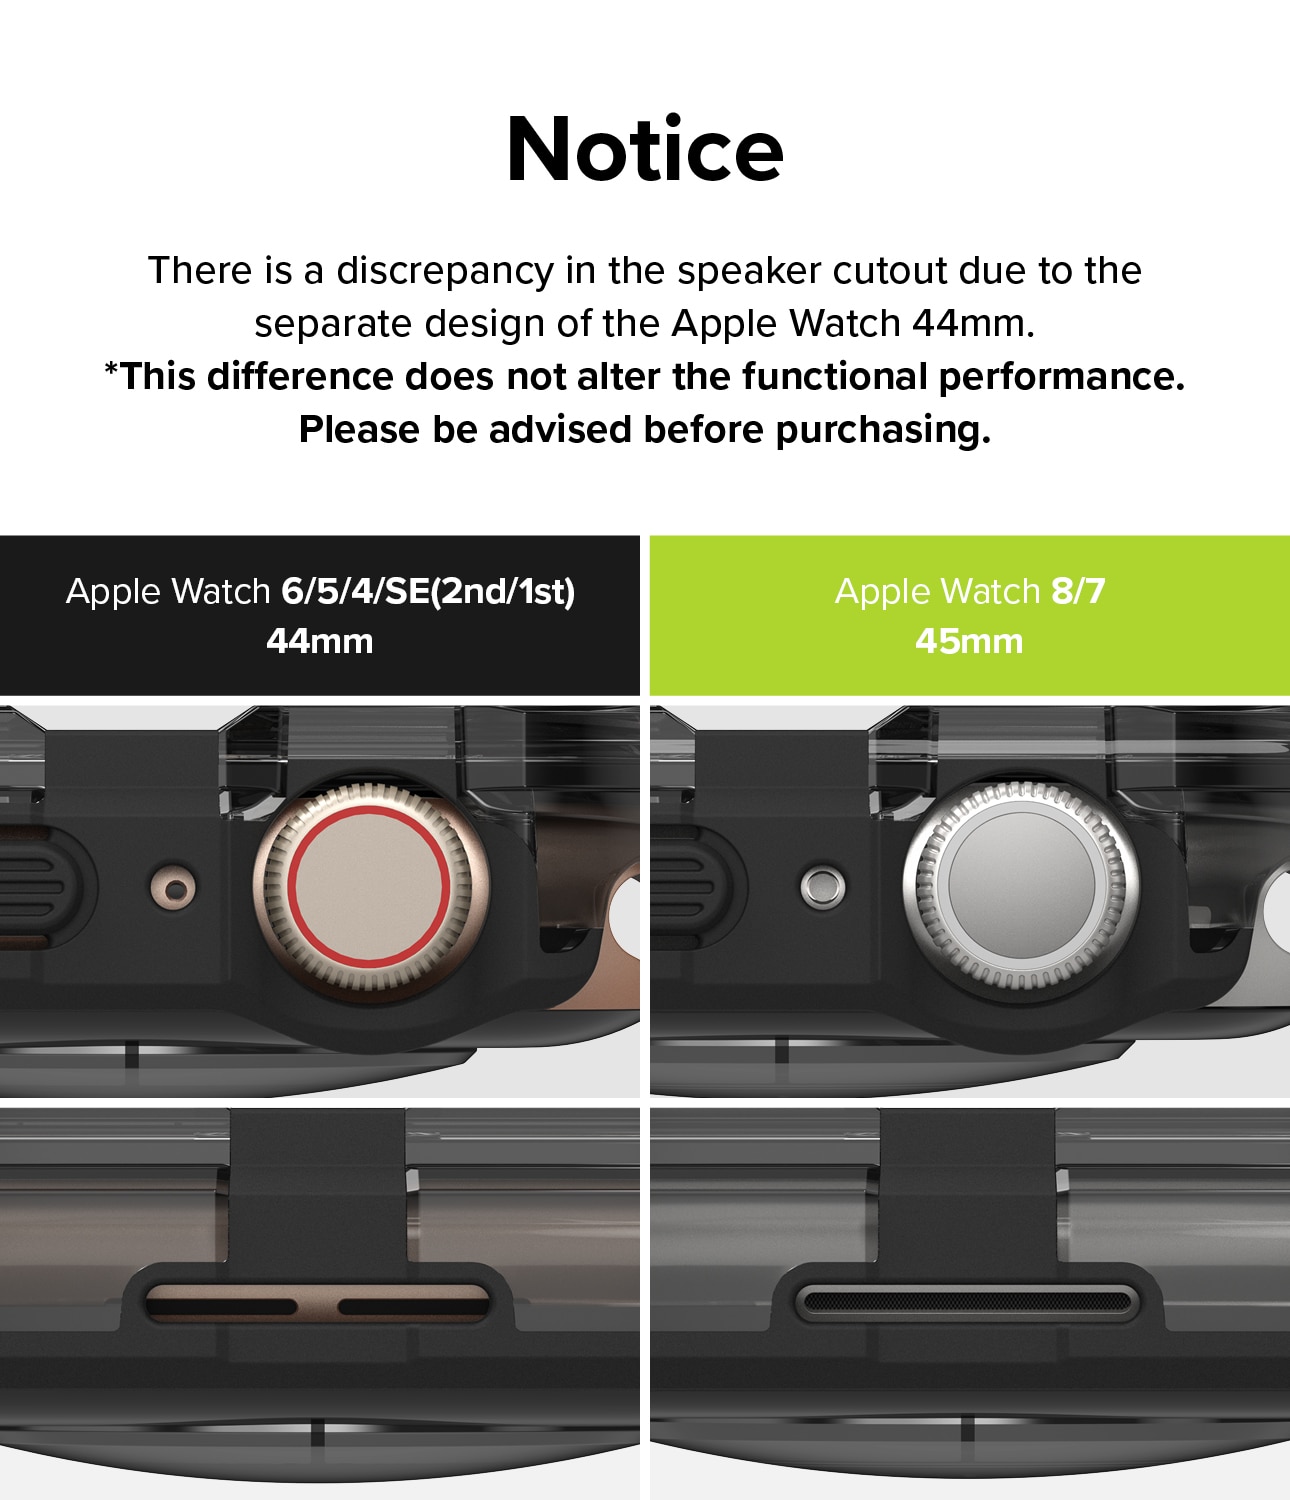 Fusion Bumper Apple Watch SE 44mm Neon Green